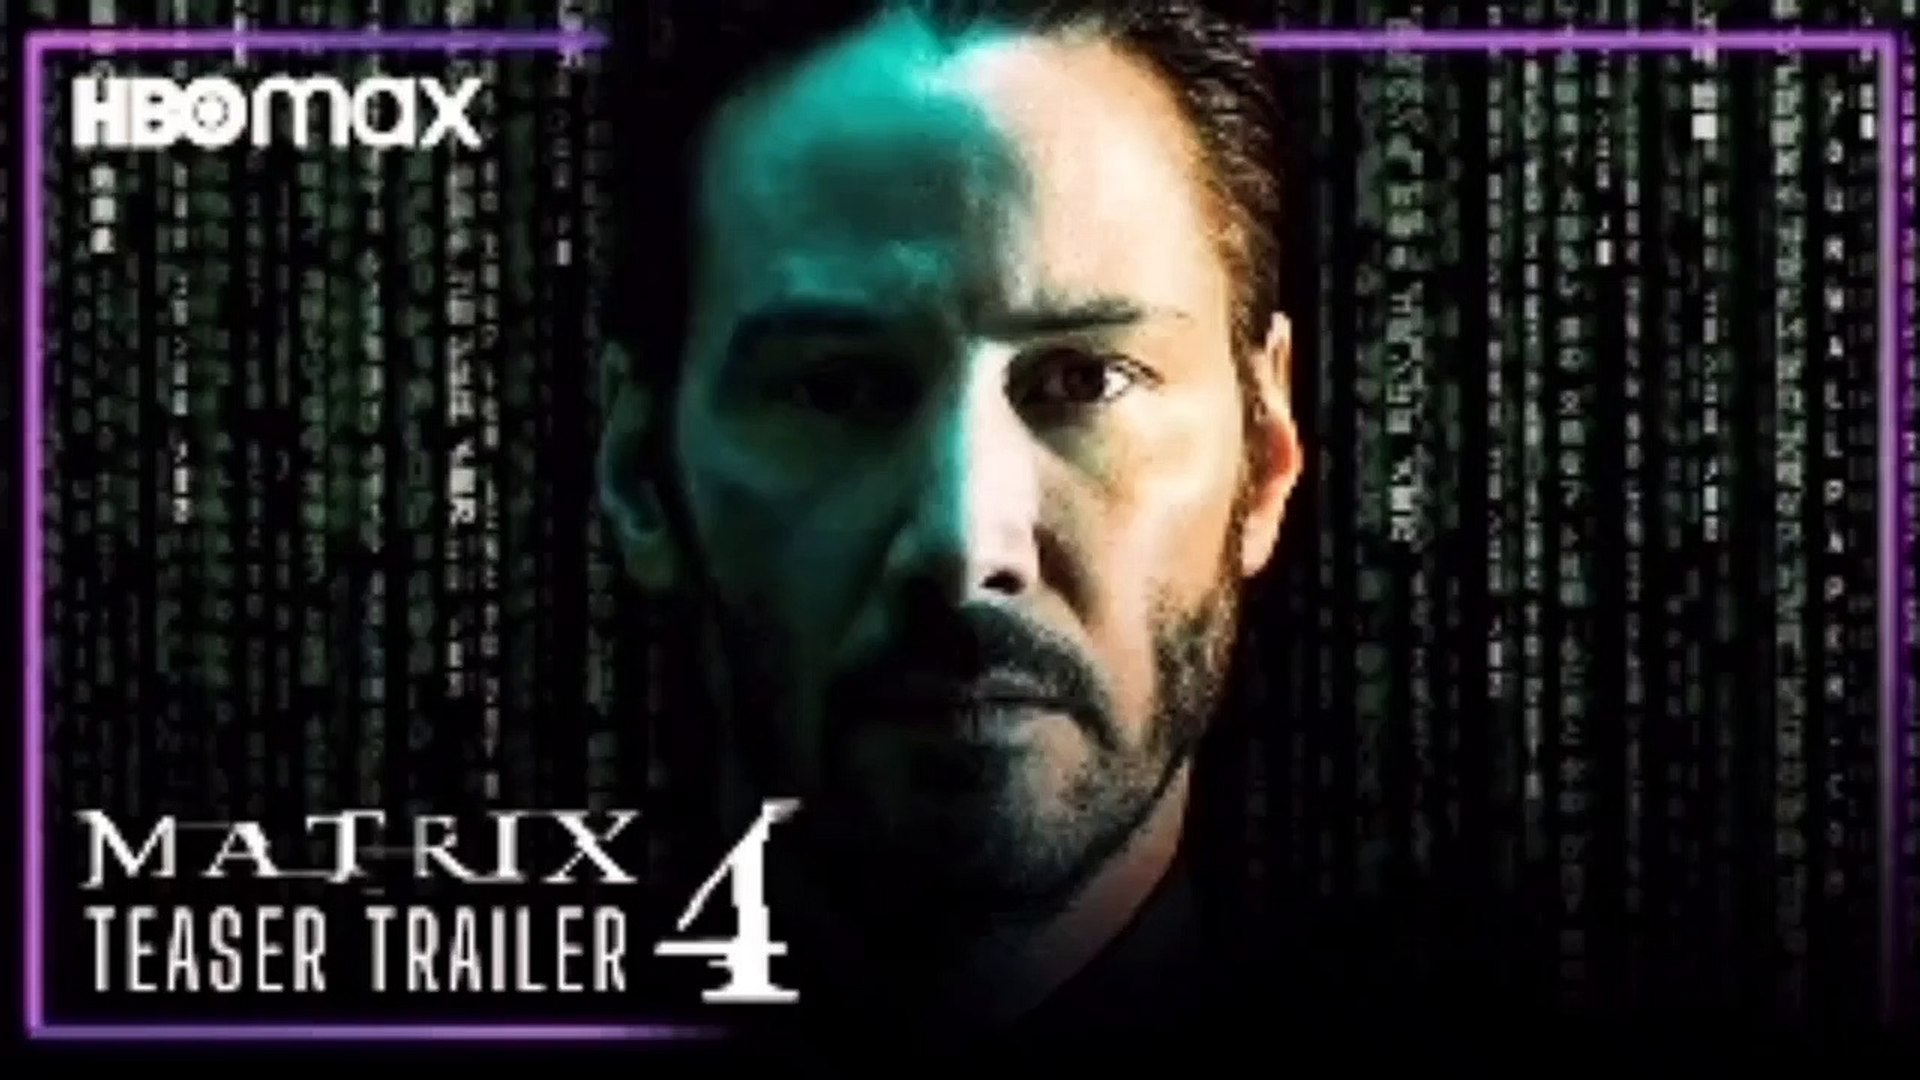 THE MATRIX 4 (2021) Teaser Trailer | HBO Max